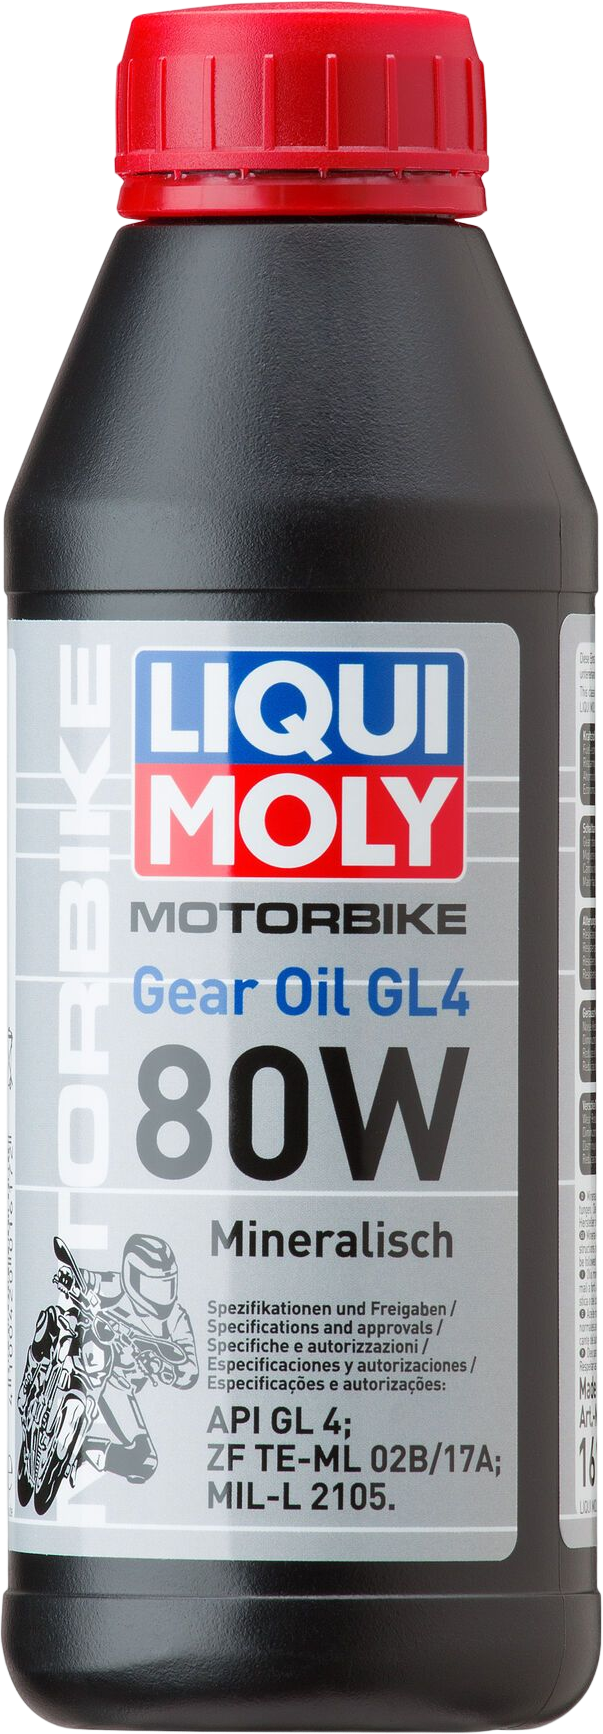 Liqui Moly Motorbike Transmissieolie (GL4) 80W, 500 ml